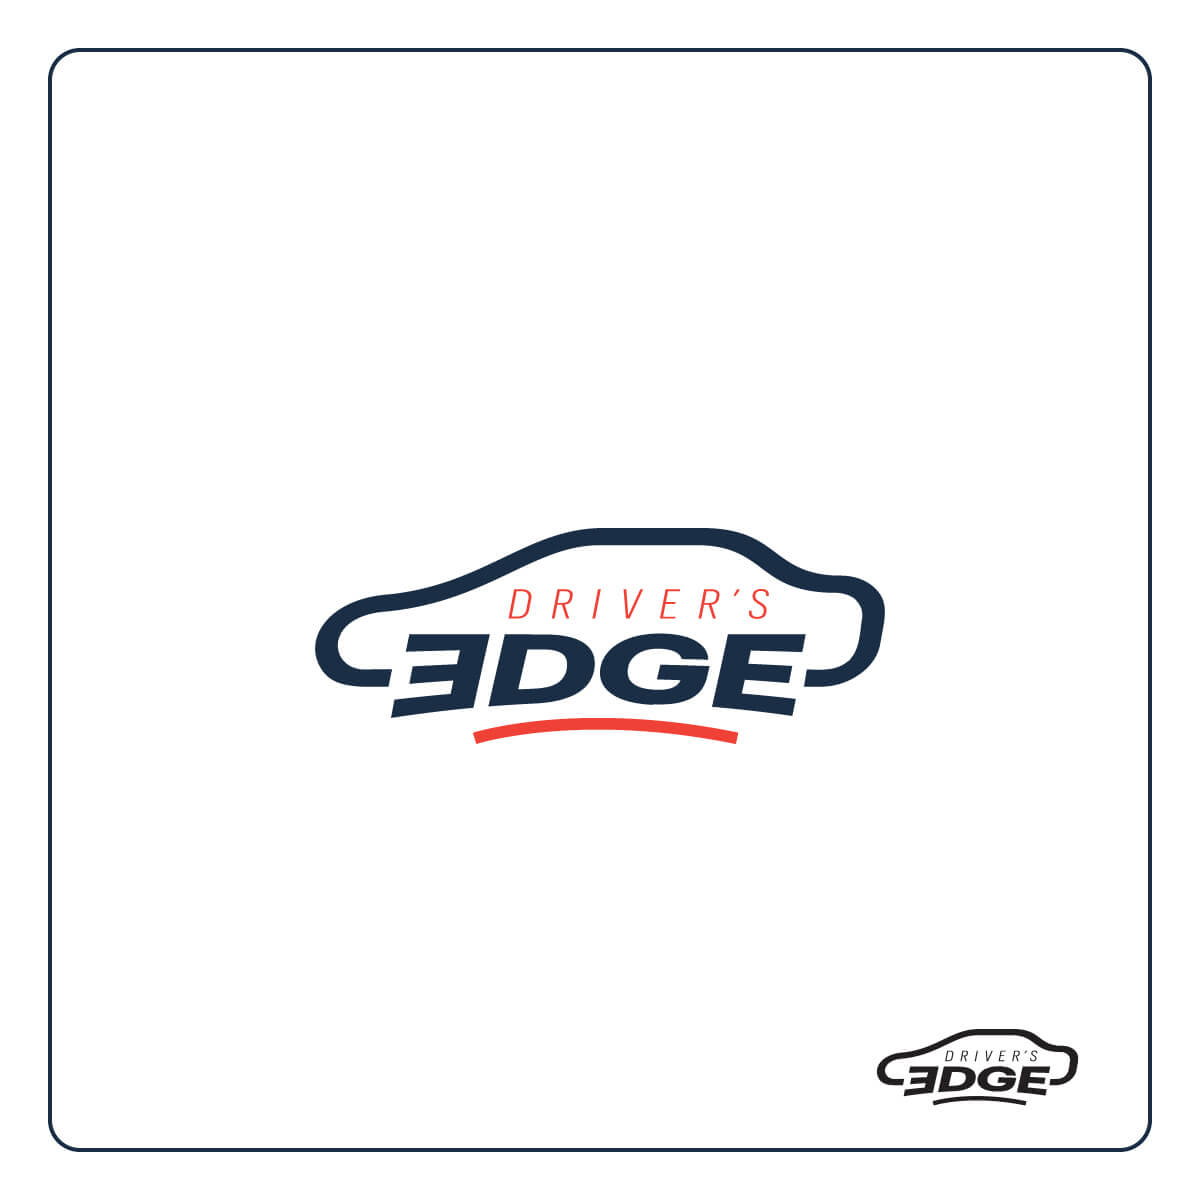 Logo Design & Brand Identity for a Car Detailing Shop from SocialSTMT